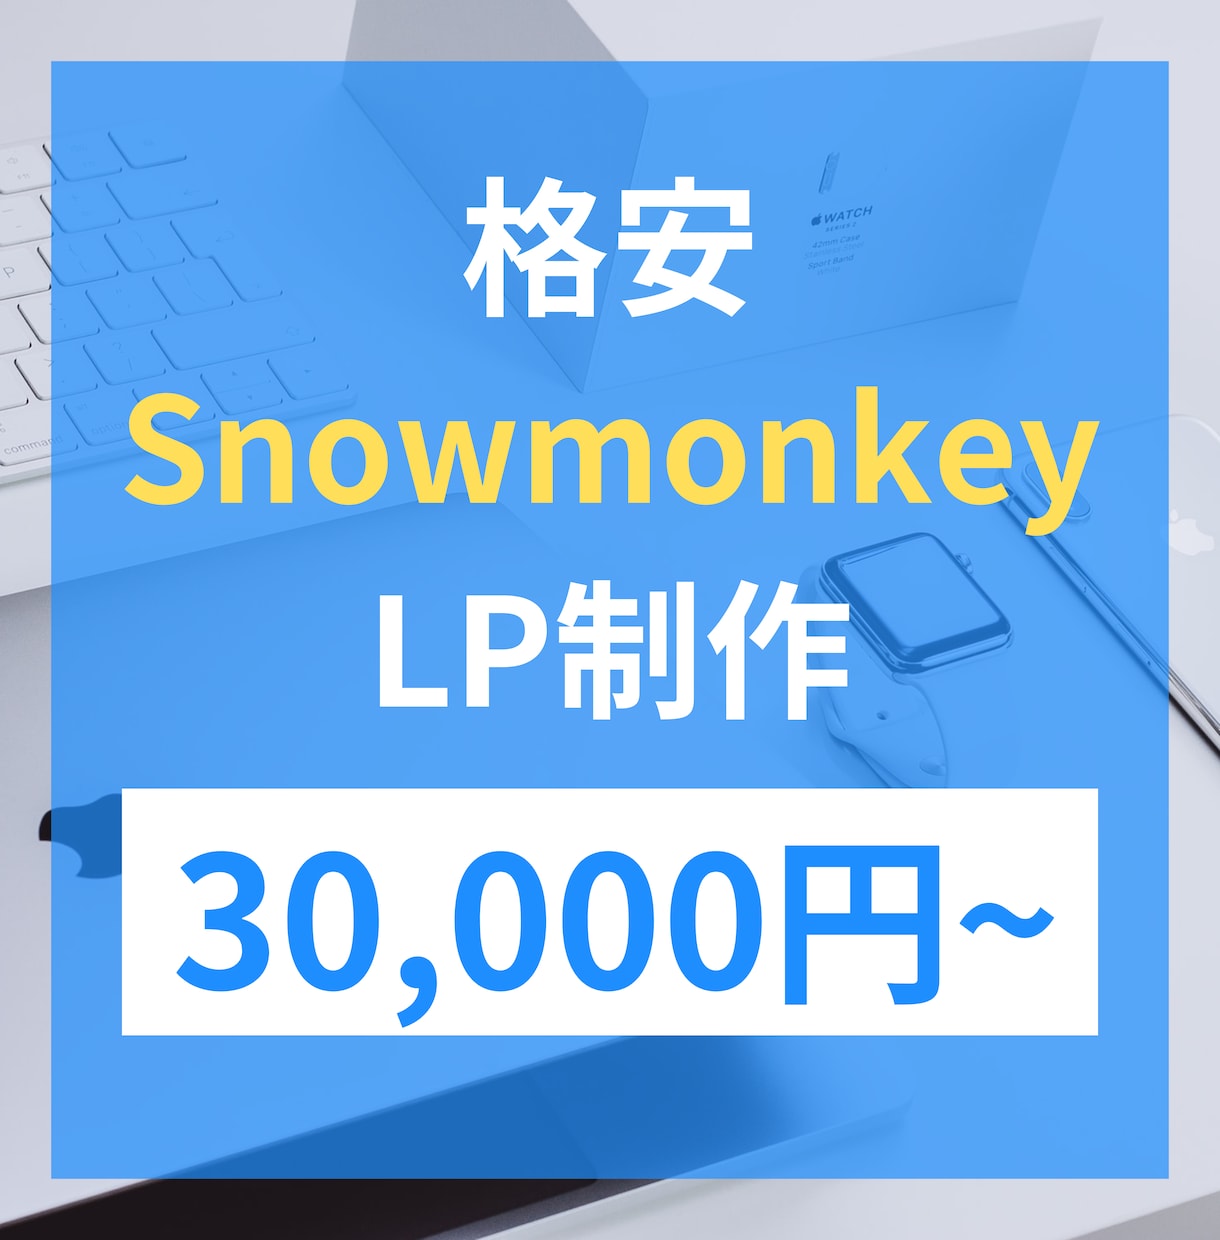 SnowMonkeyでLP制作いたします [スマホ対応込み]格安/高品質でお作りいたします。 イメージ1